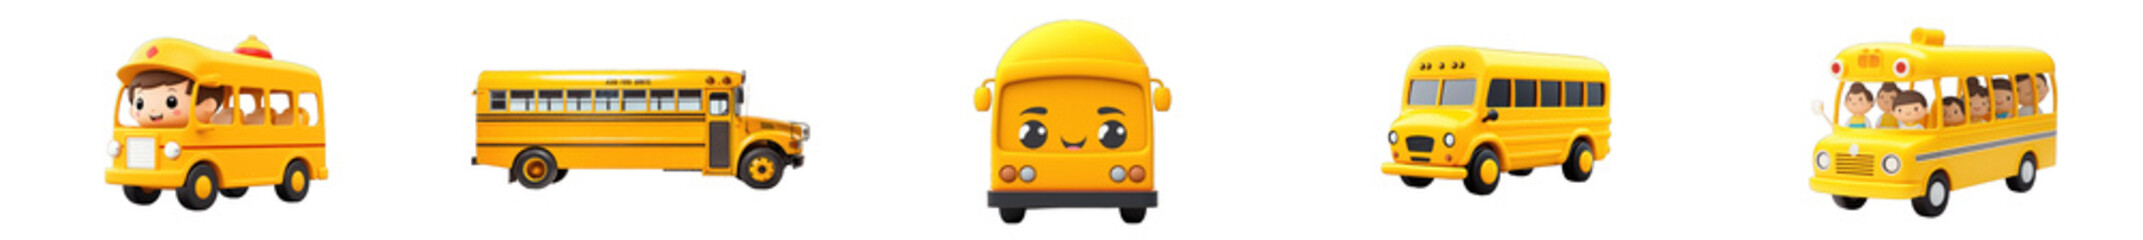 set of funny cartoon yellow school bus 3d character